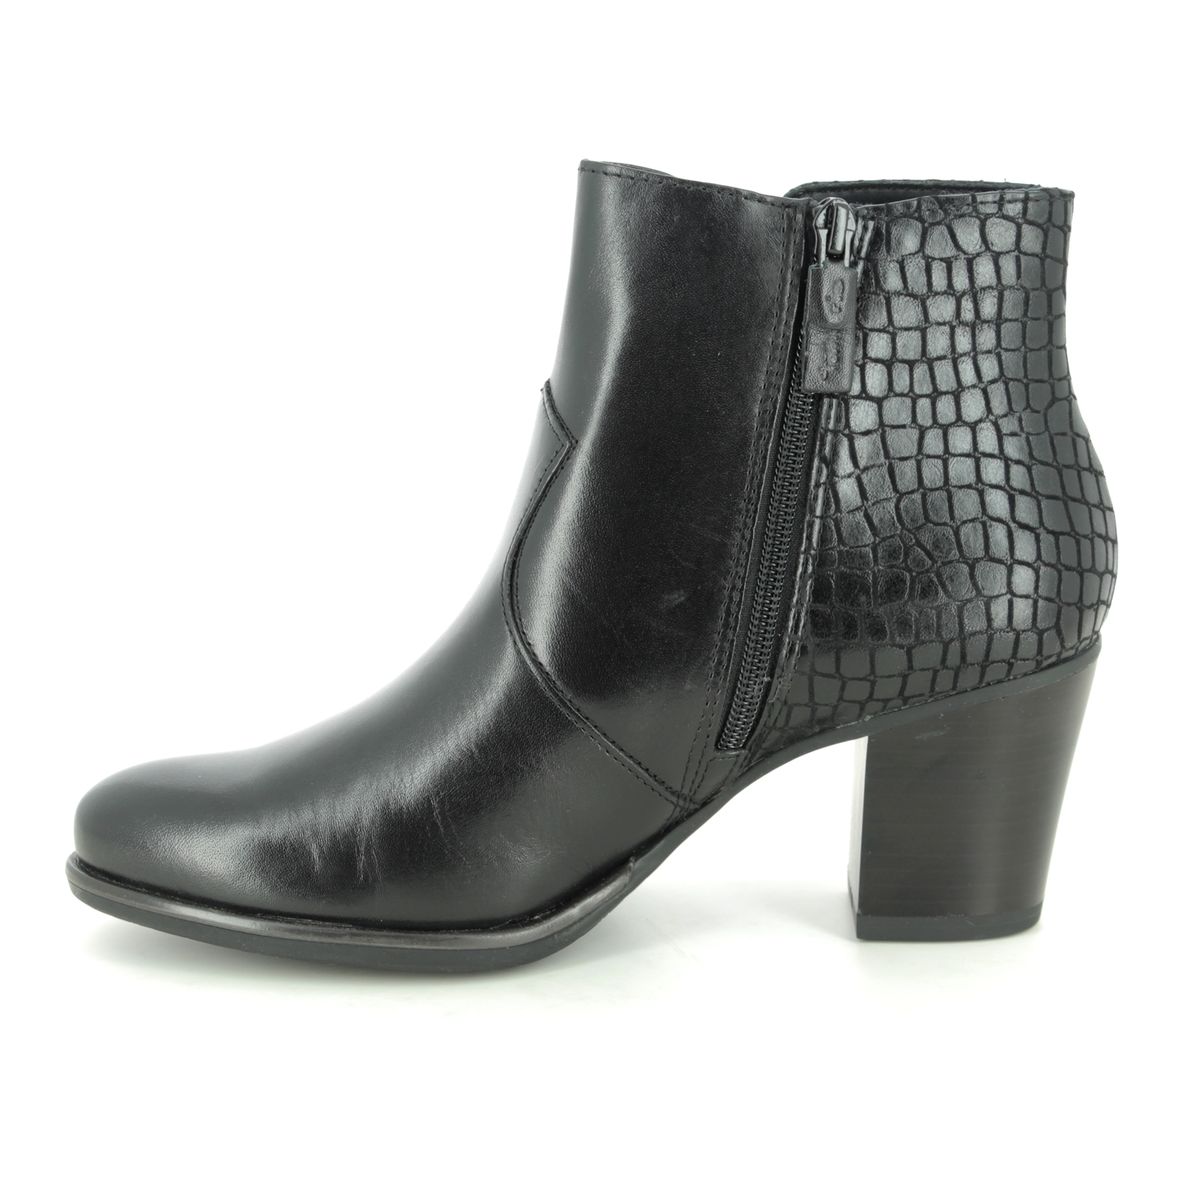 Tamaris Tora 25338-25-097 Black leather Ankle Boots